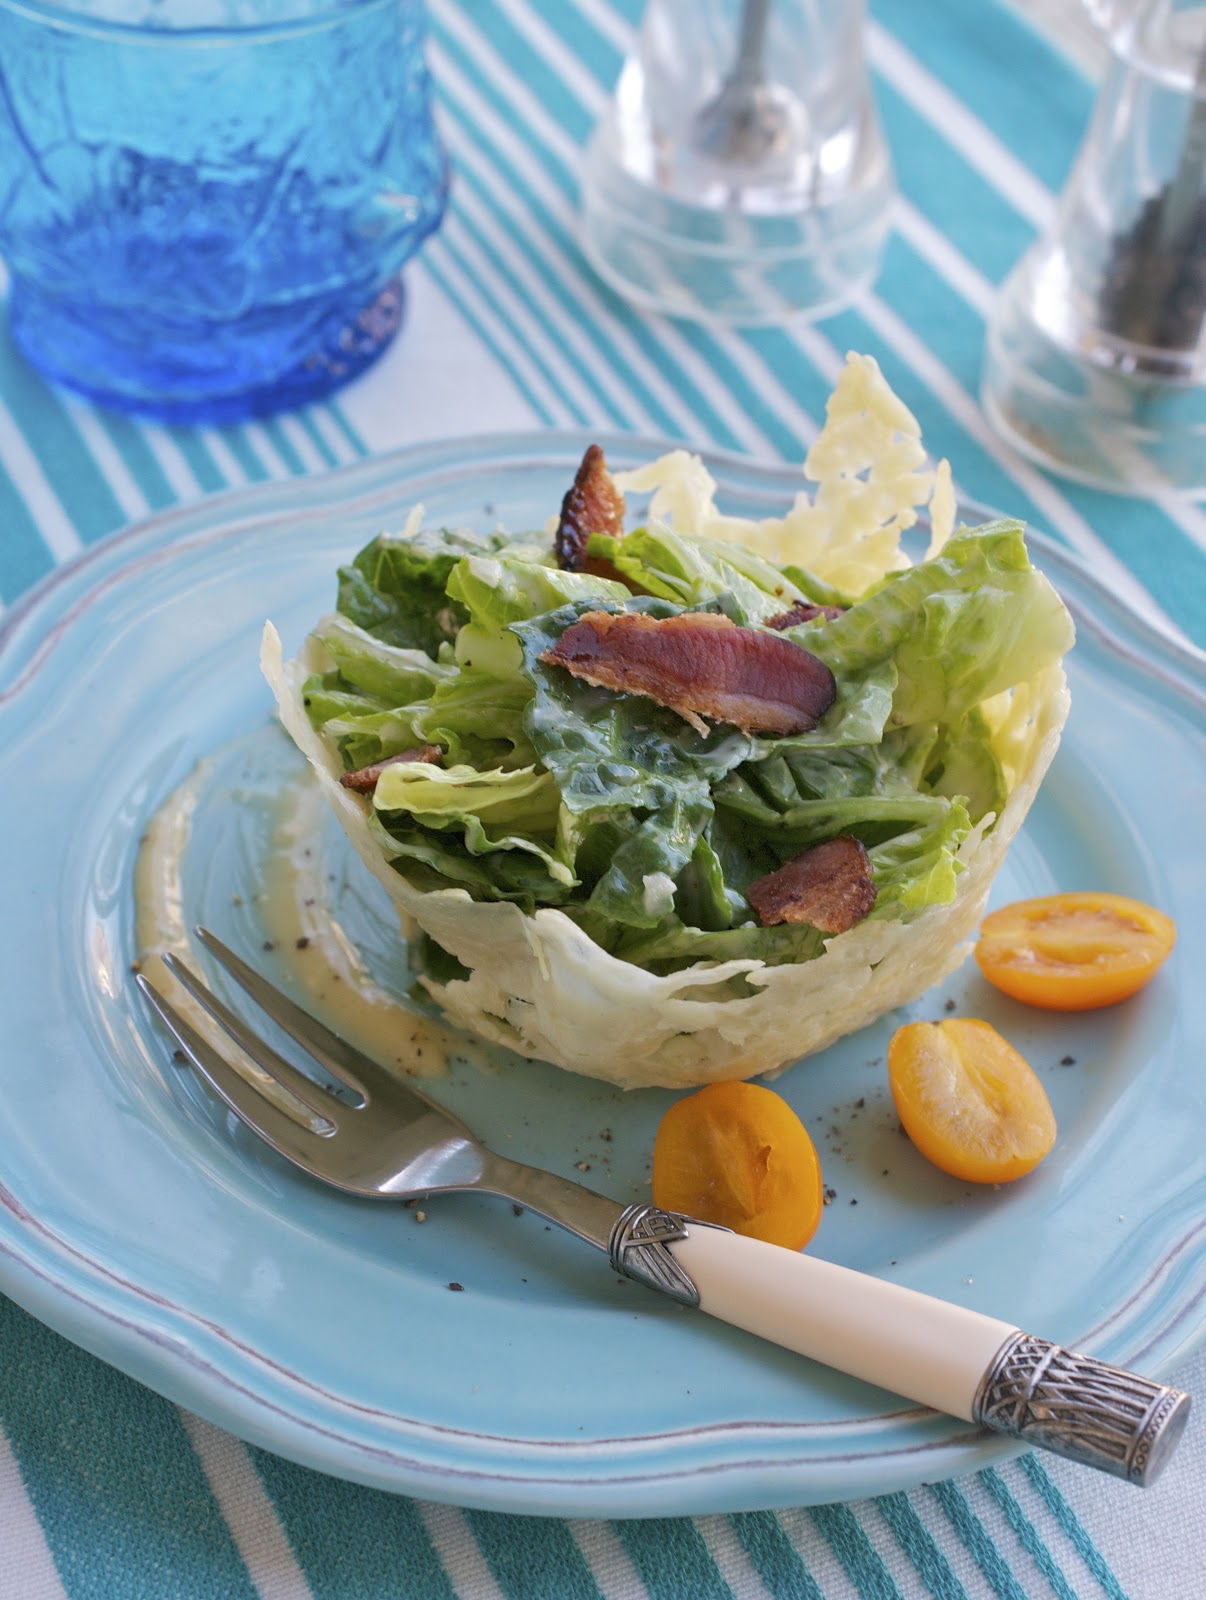 http://1.bp.blogspot.com/-NC7YC1Re2Io/UWRHpFBYzrI/AAAAAAAAUQU/K4p94k2XlRk/s1600/Caesar+Salad+with+Parmesan+Cup.jpg